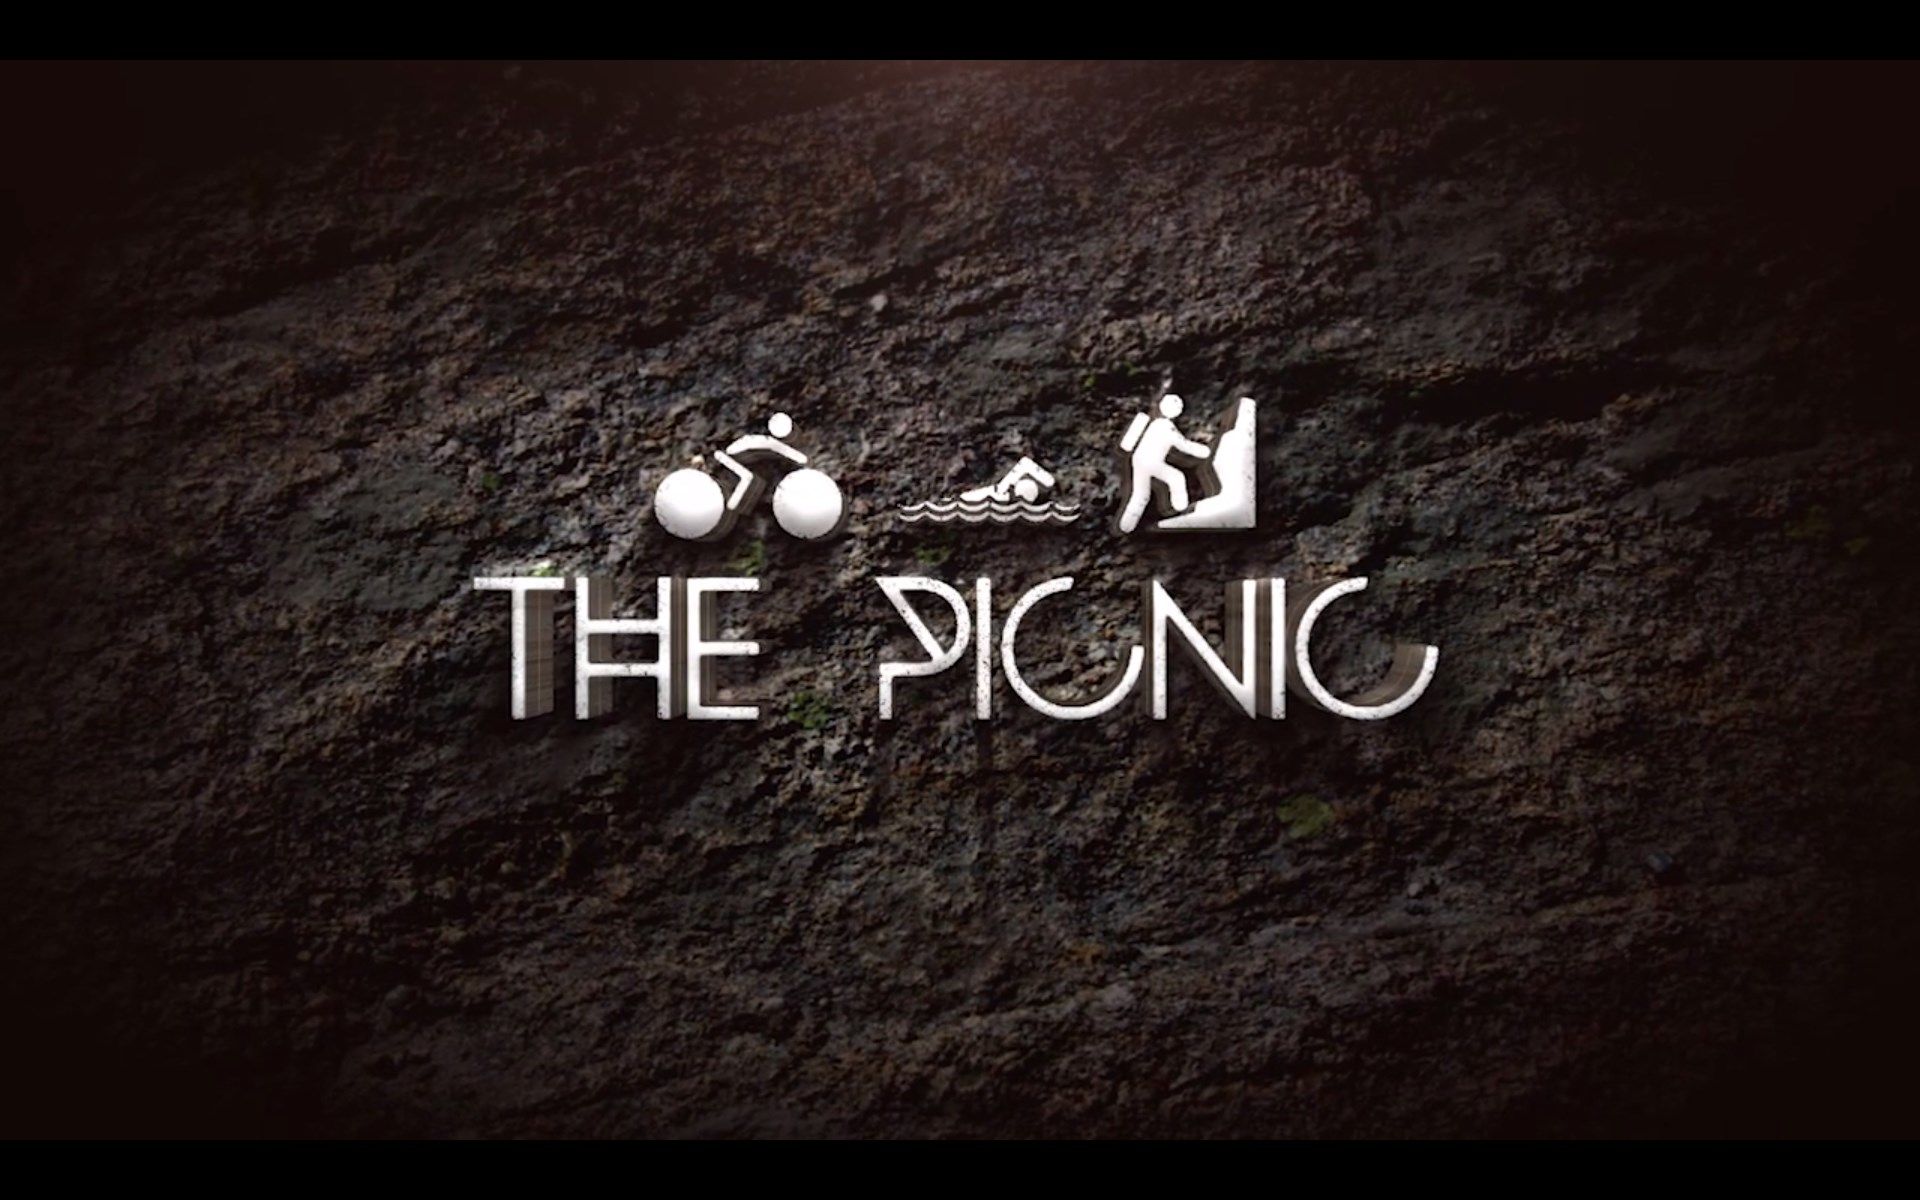 Wood Design Studios | “The Picnic” Documentary intro animation